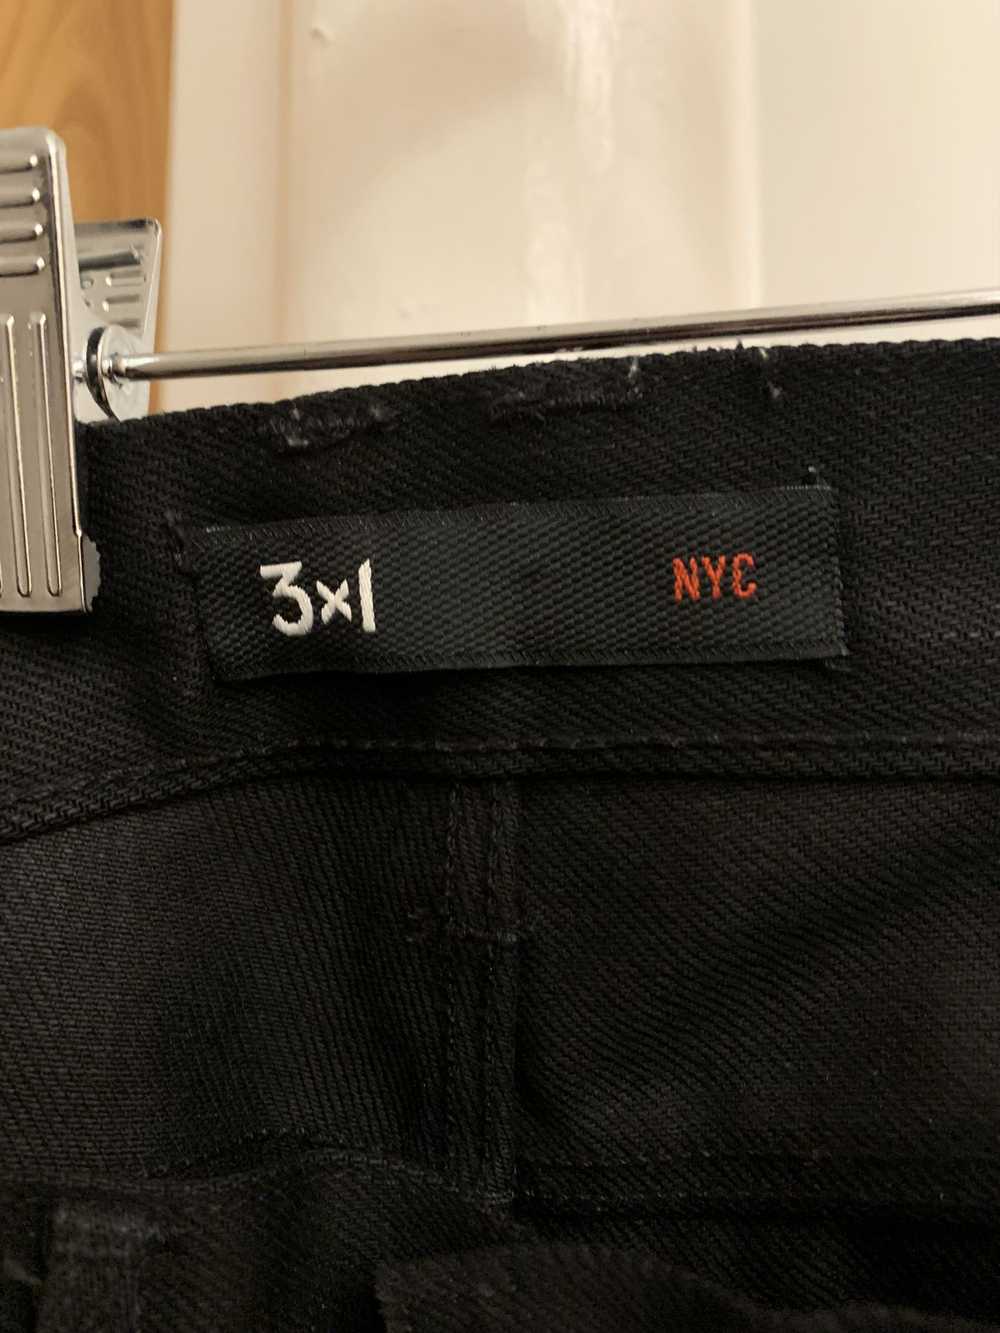 3 X 1 3x1 NYC Black Jeans - image 2